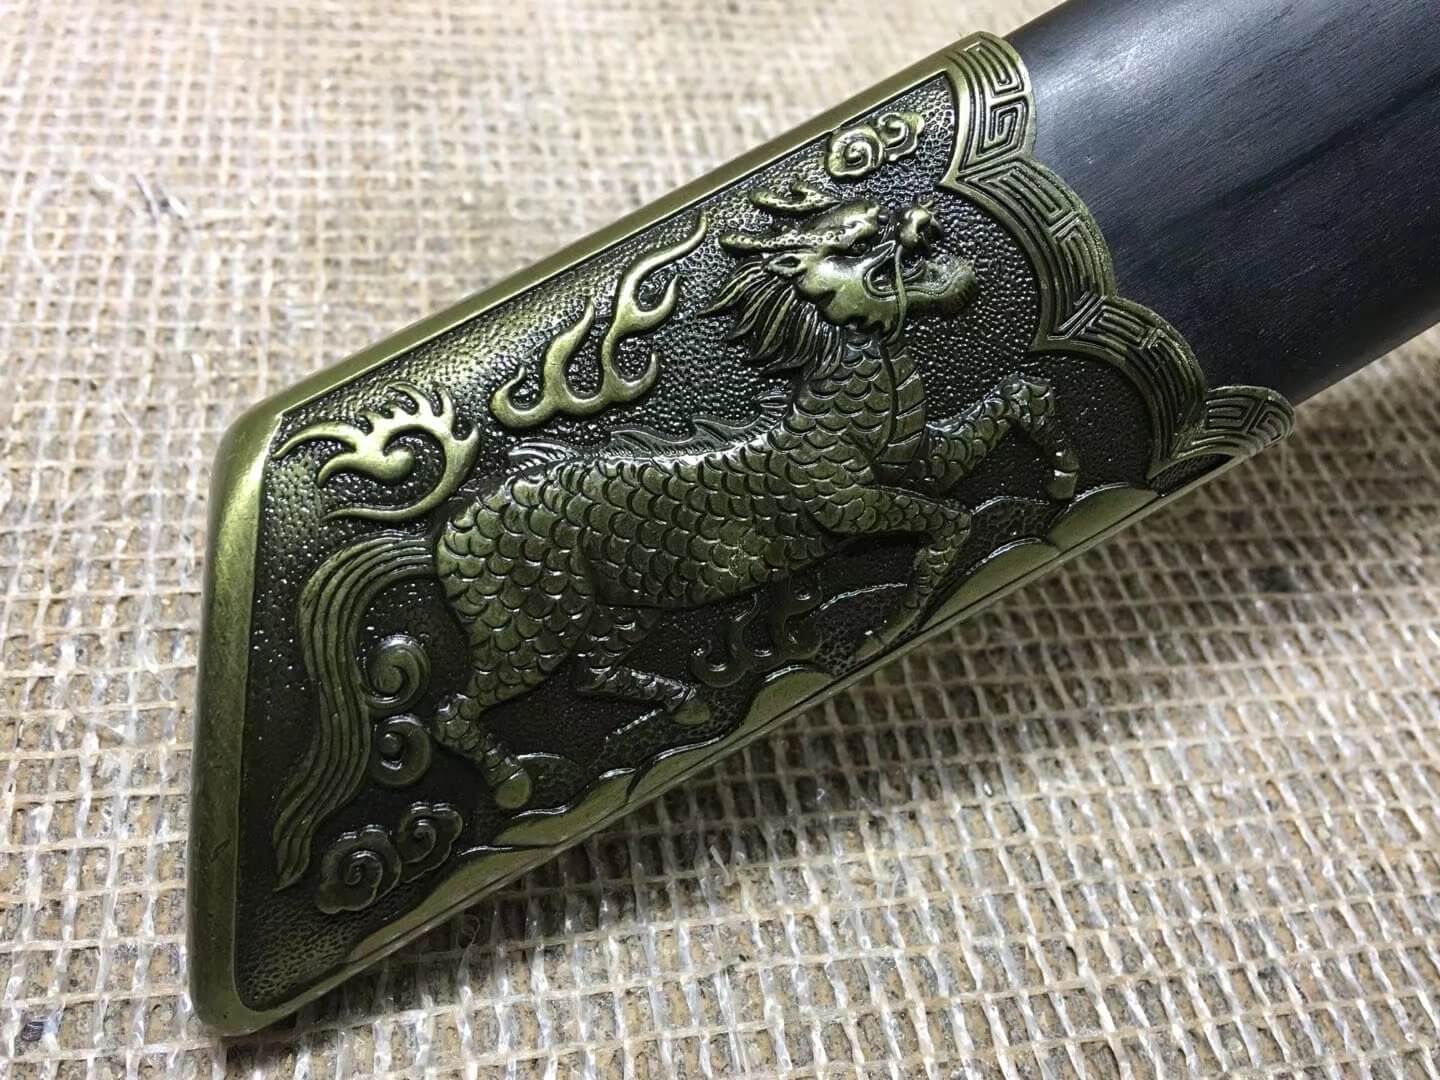 Kangxi dagger,High carbon steel,Black scabbard,Alloy,Length 27" - Chinese sword shop